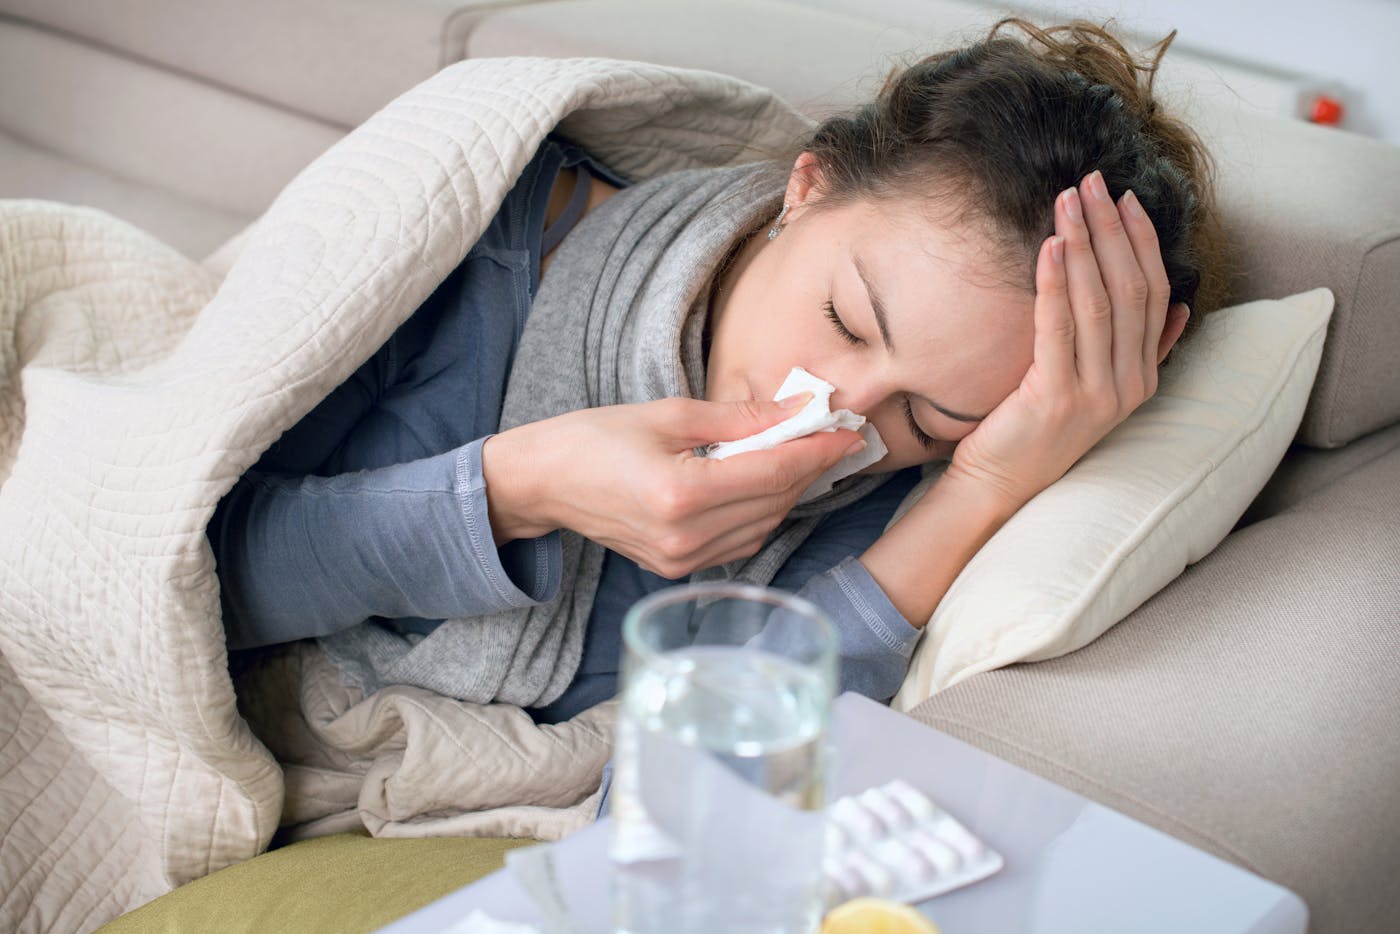 Proteinmangel schwaecht Immunsystem Frau liegt krank auf dem Sofa